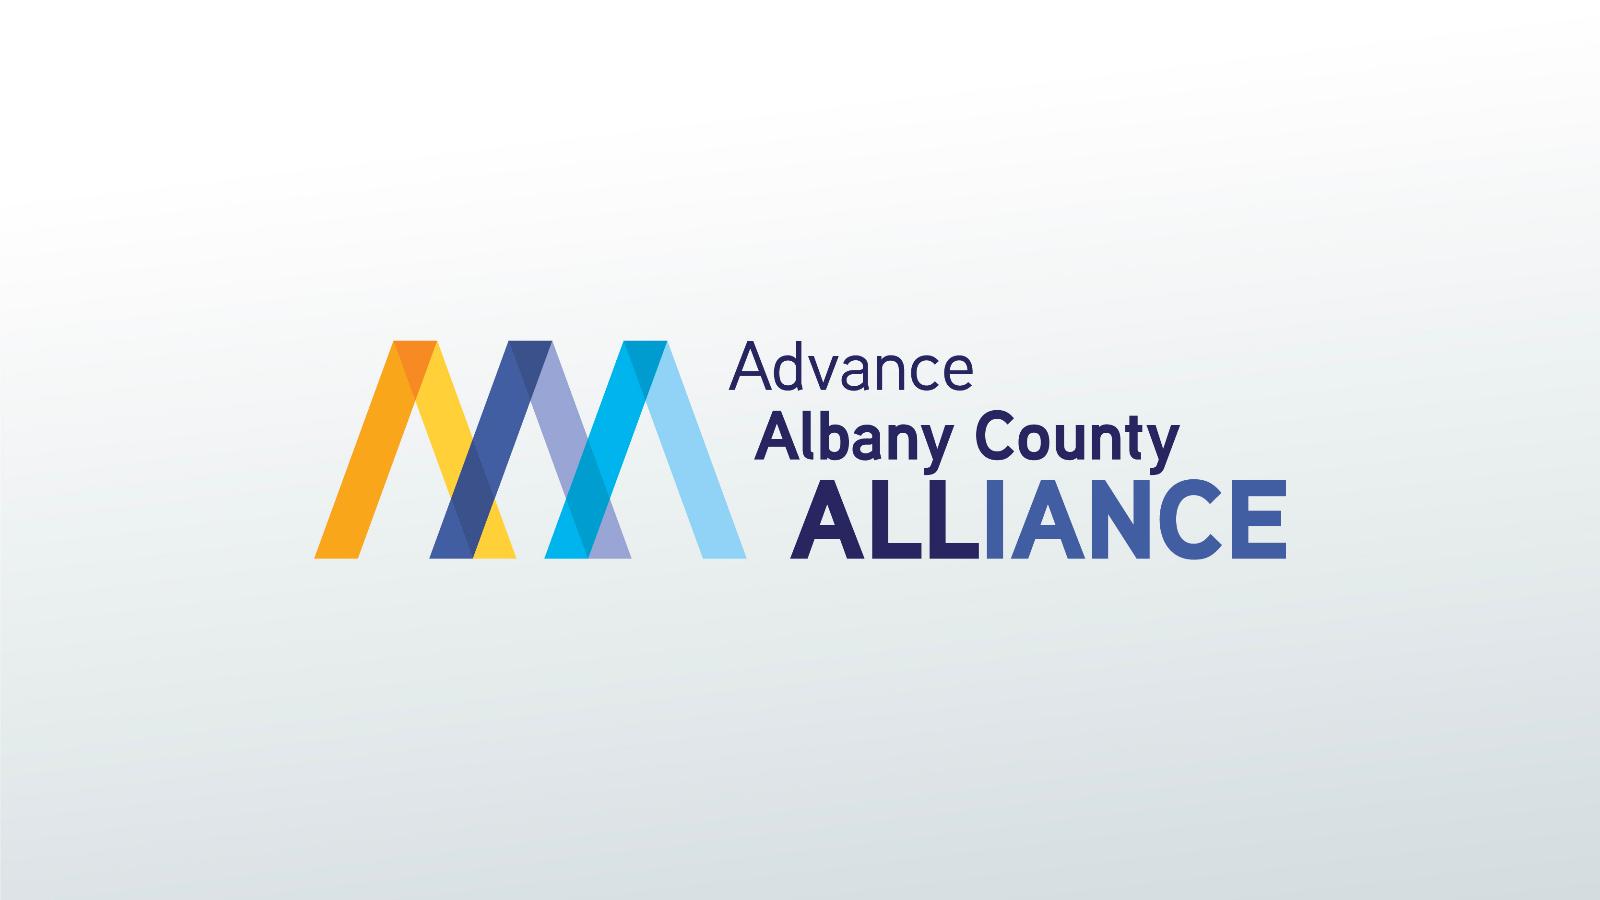 Logo Design & Brand Identity | Advance Albany County Alliance